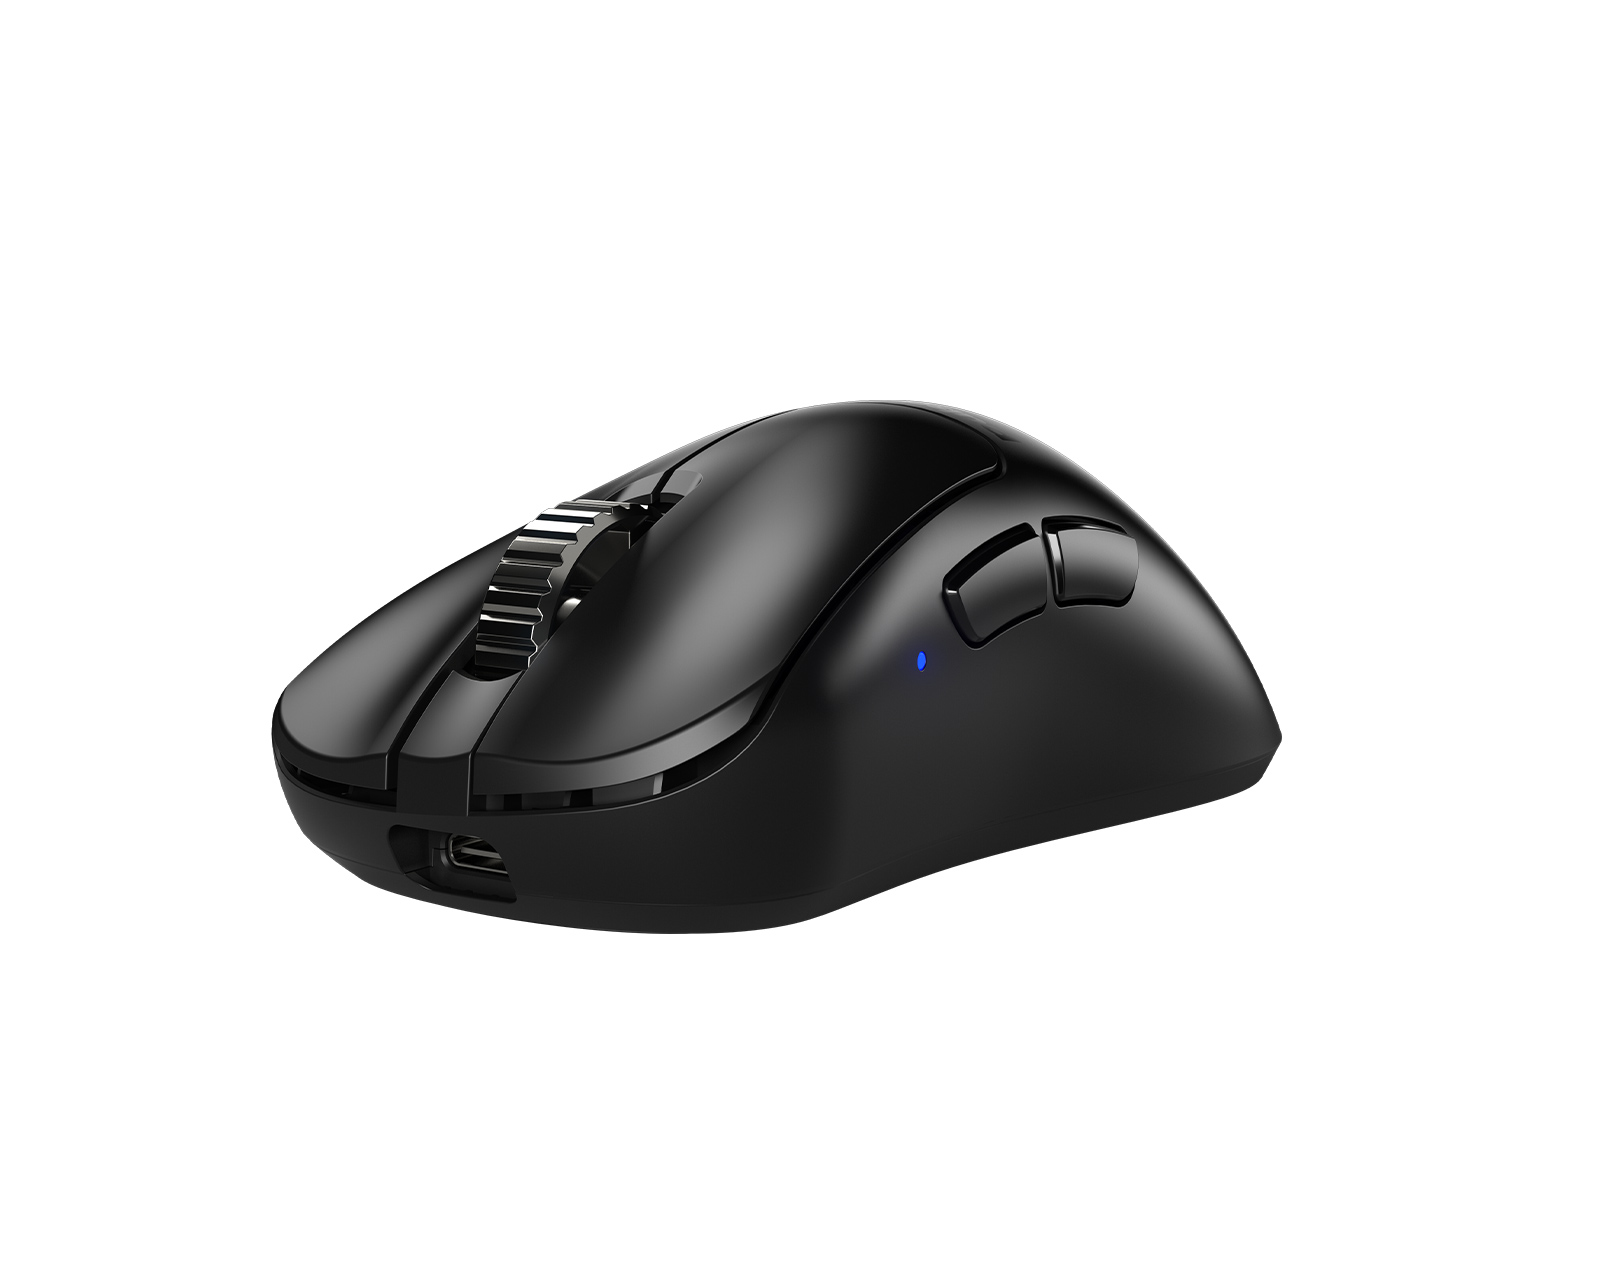 Pulsar Xlite V3 eS Wireless Gaming Mouse - Black